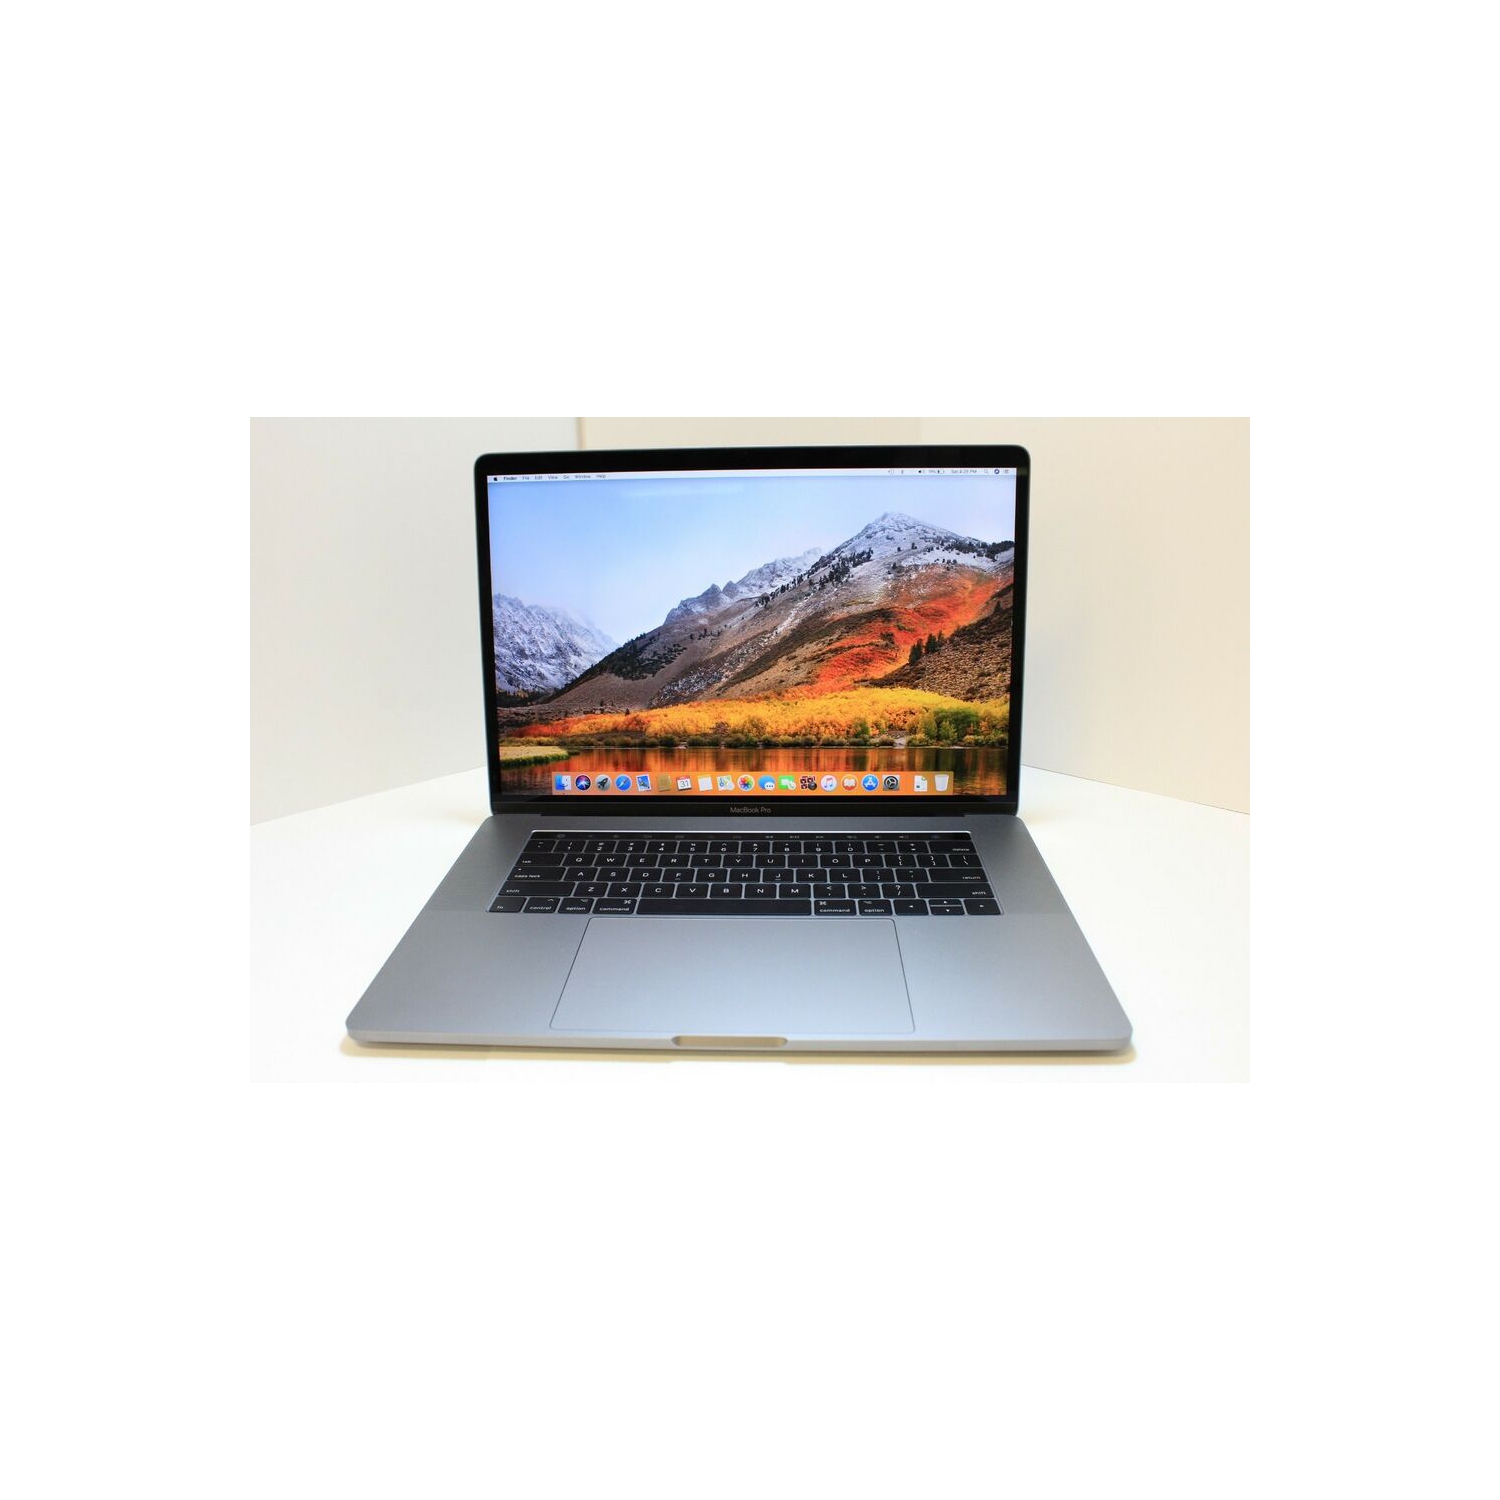 Refurbished(Good) - Apple MacBook Pro 13-Inch - Core i5 - 3.3GHZ 